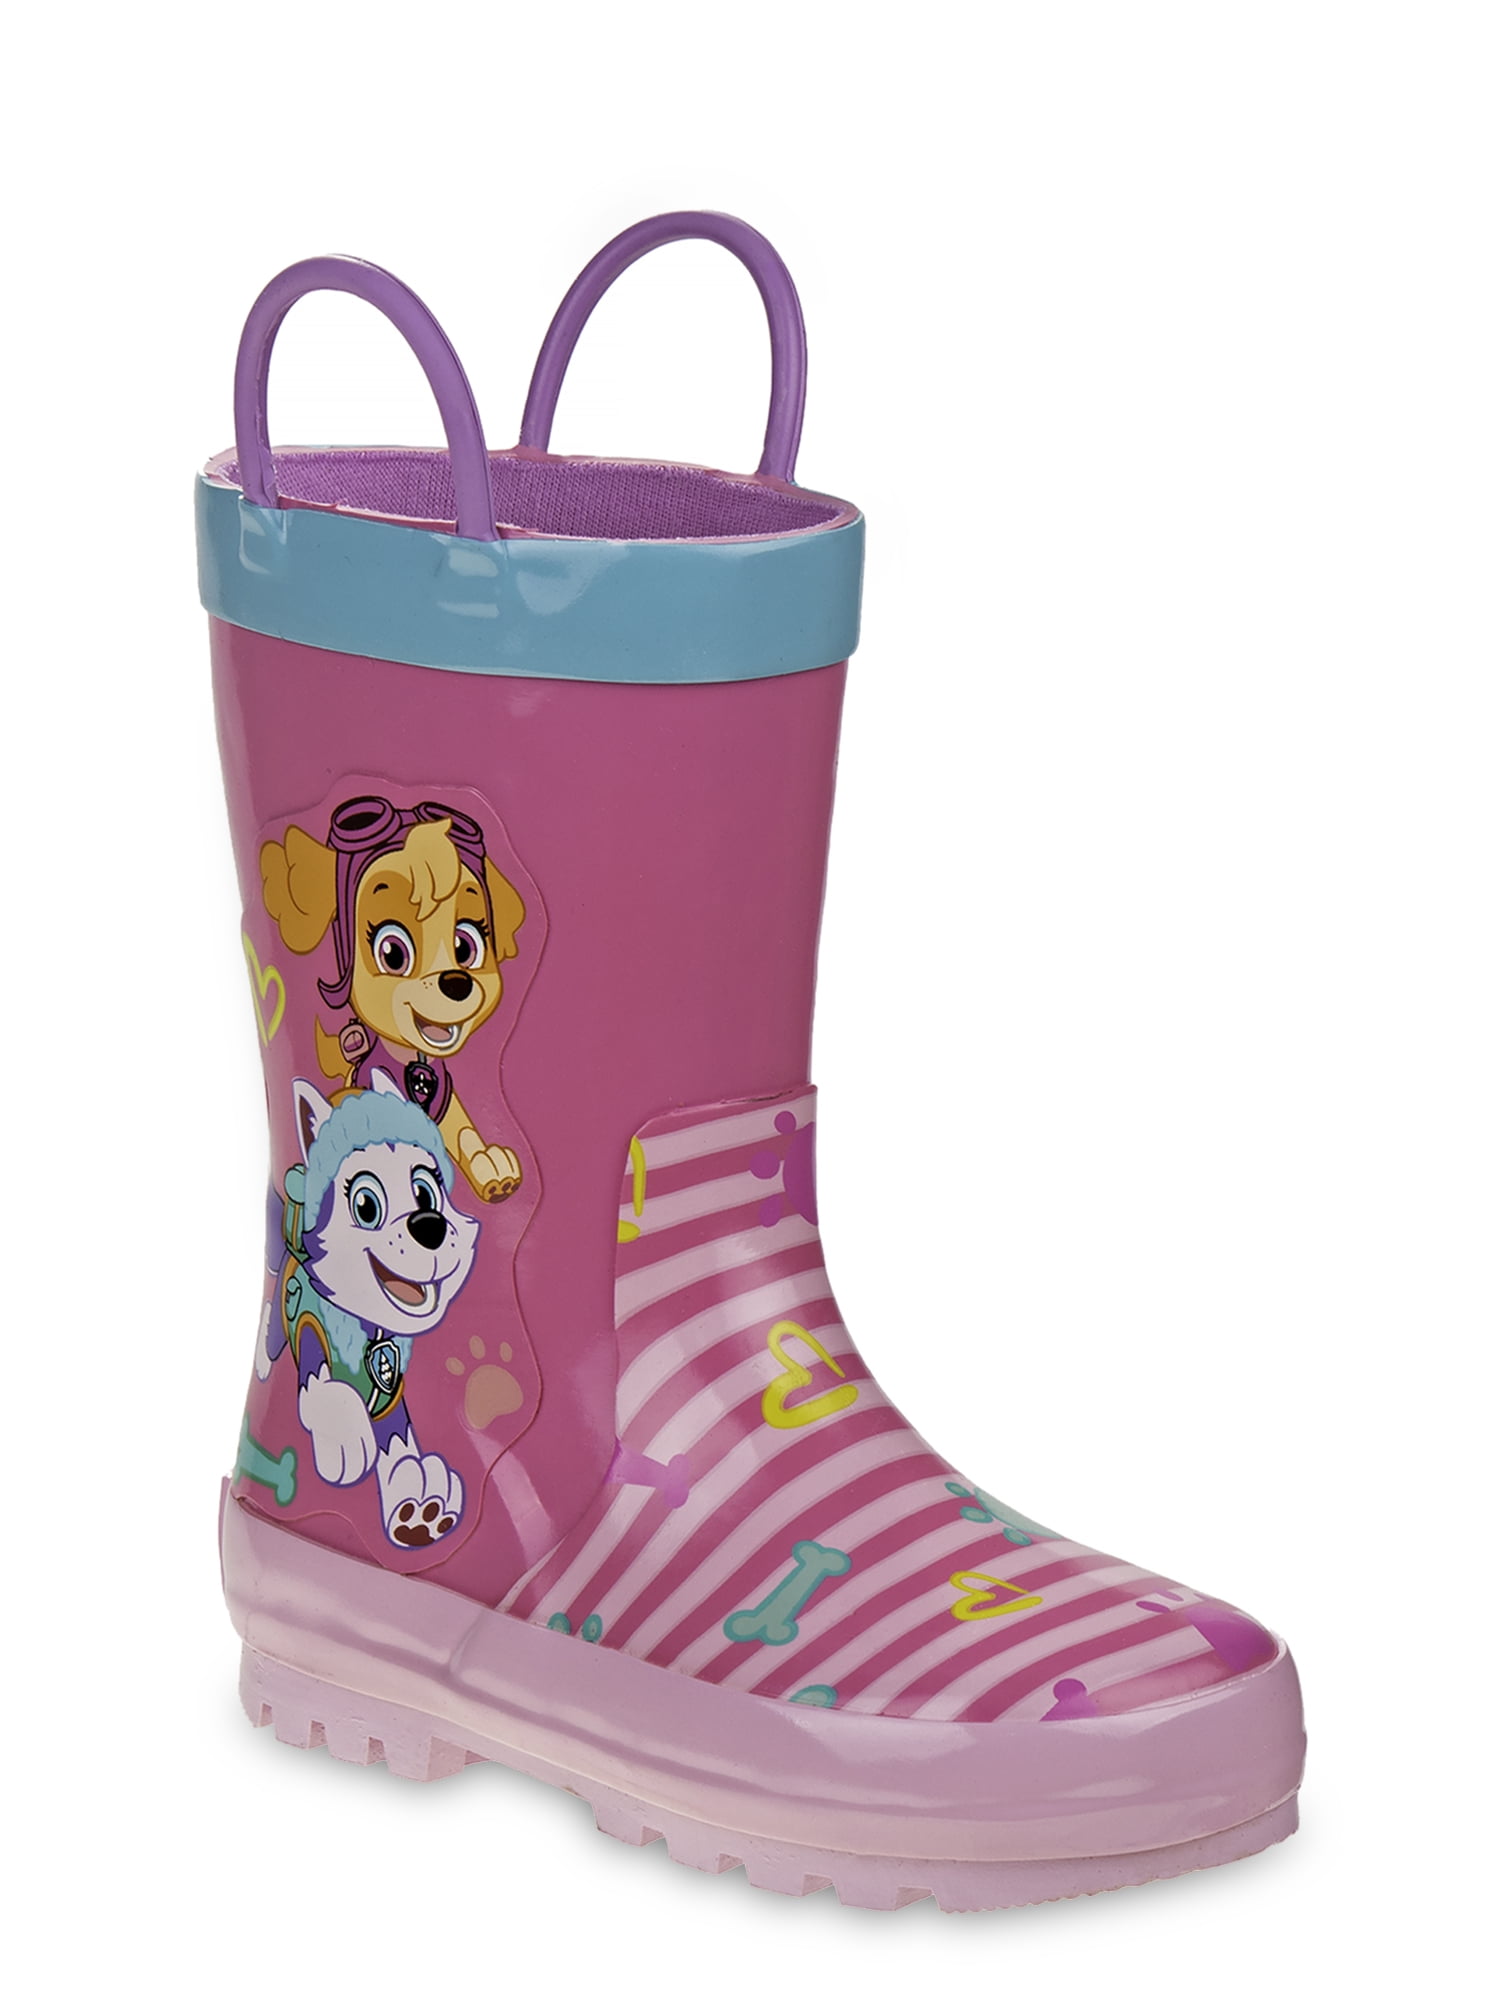 rain boots for girls walmart